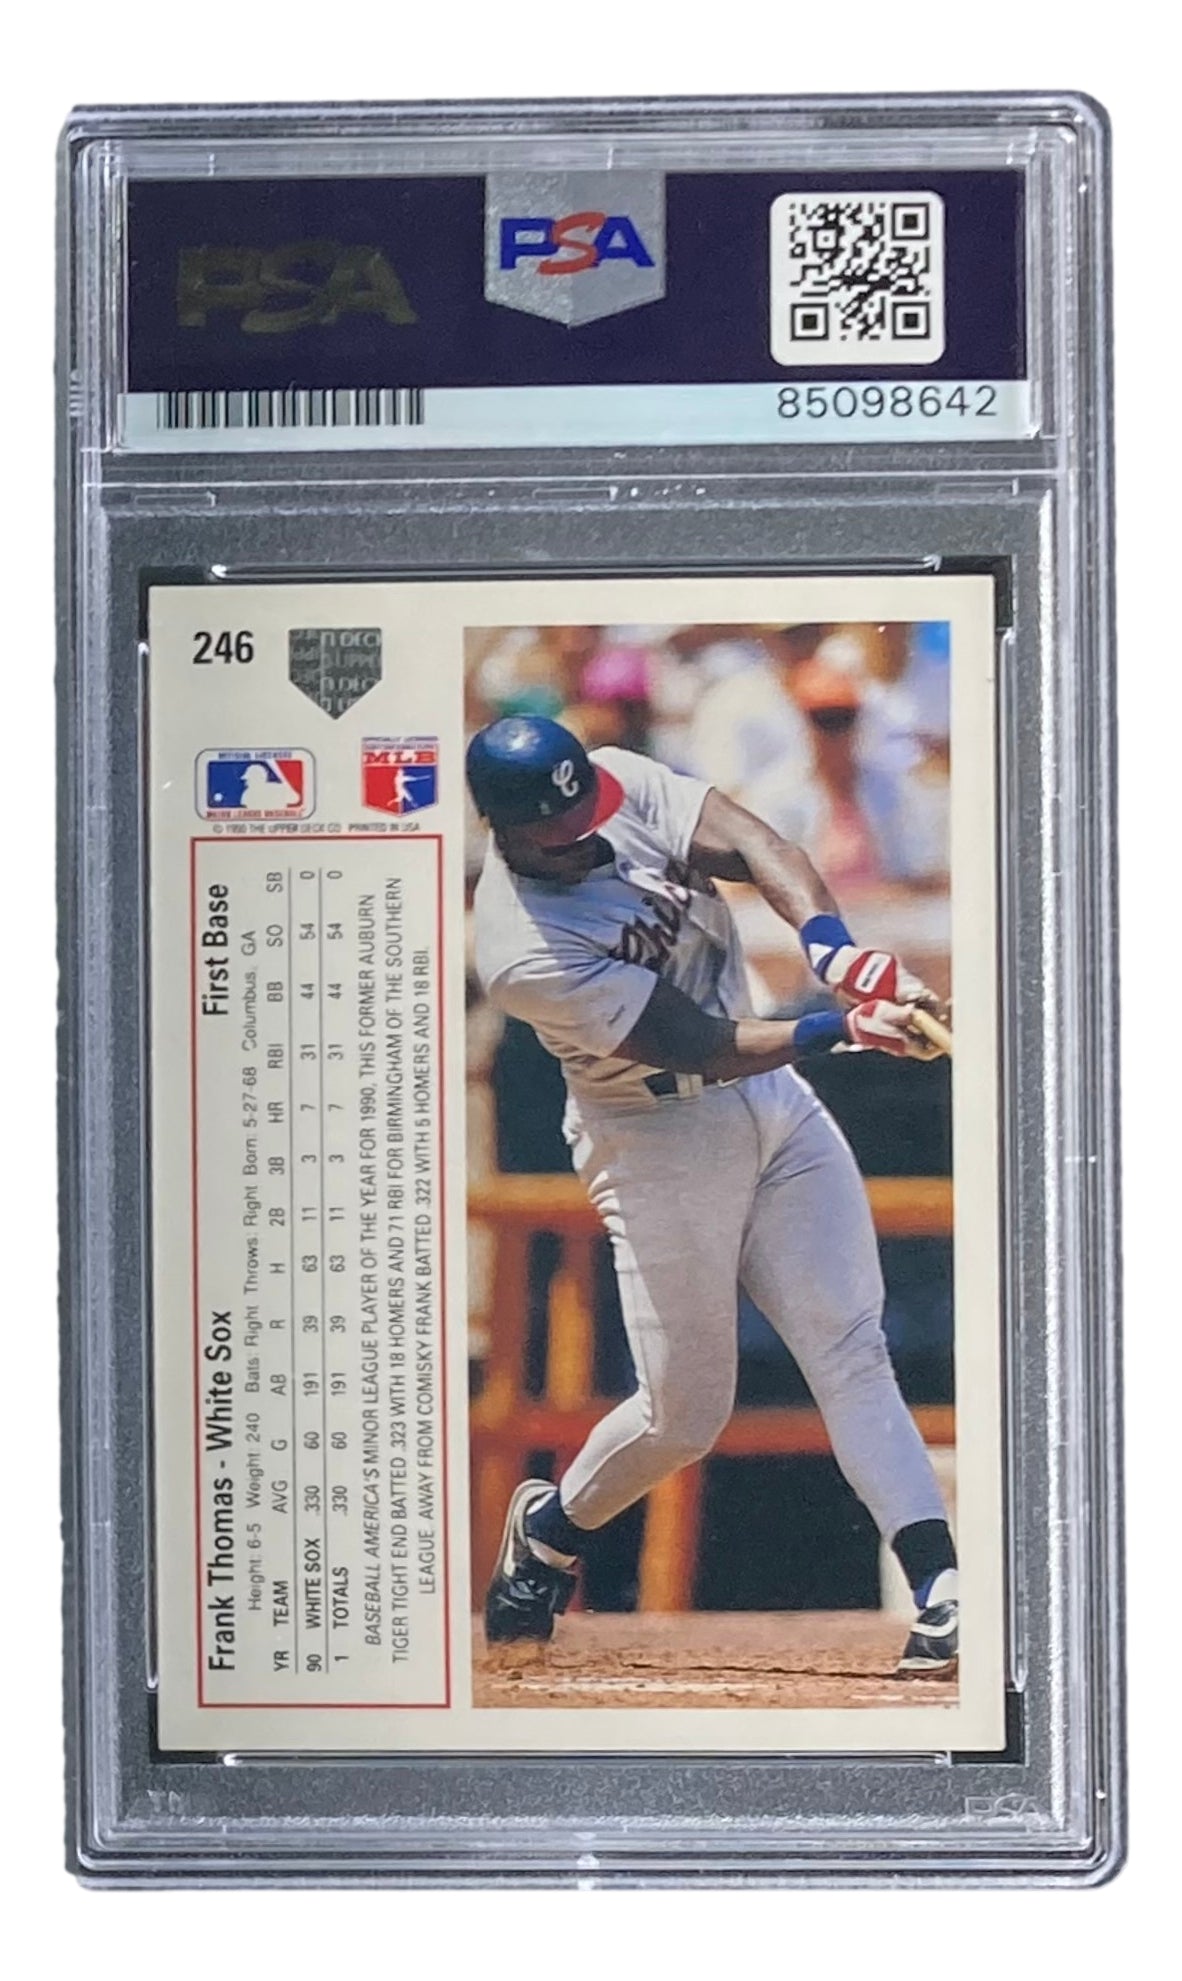 1991 Upper Deck Frank Thomas #246 Rookie Baseball Card